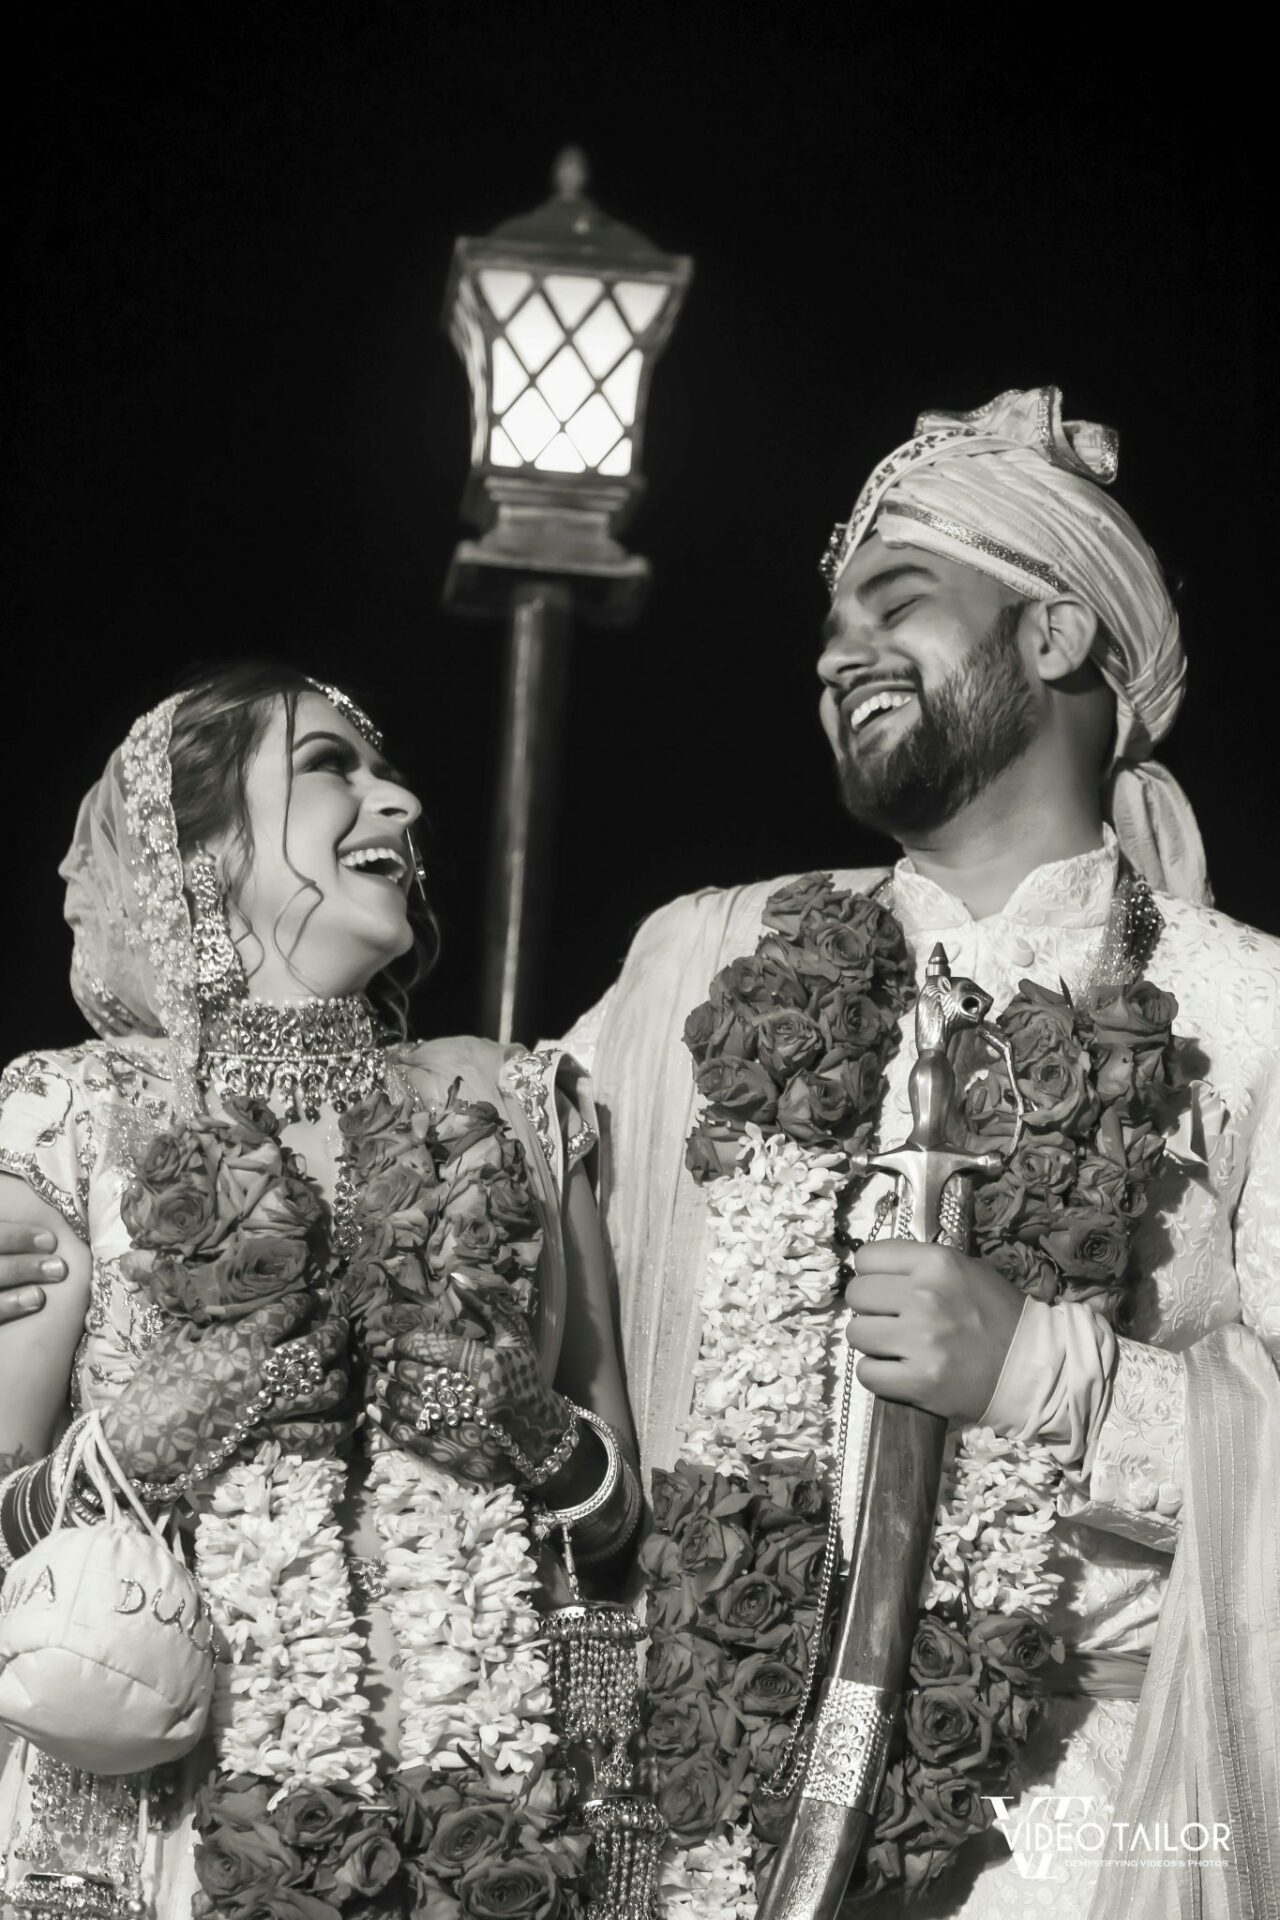 Cute pose | Indian wedding poses, Indian wedding couple photography, Indian  wedding photography poses